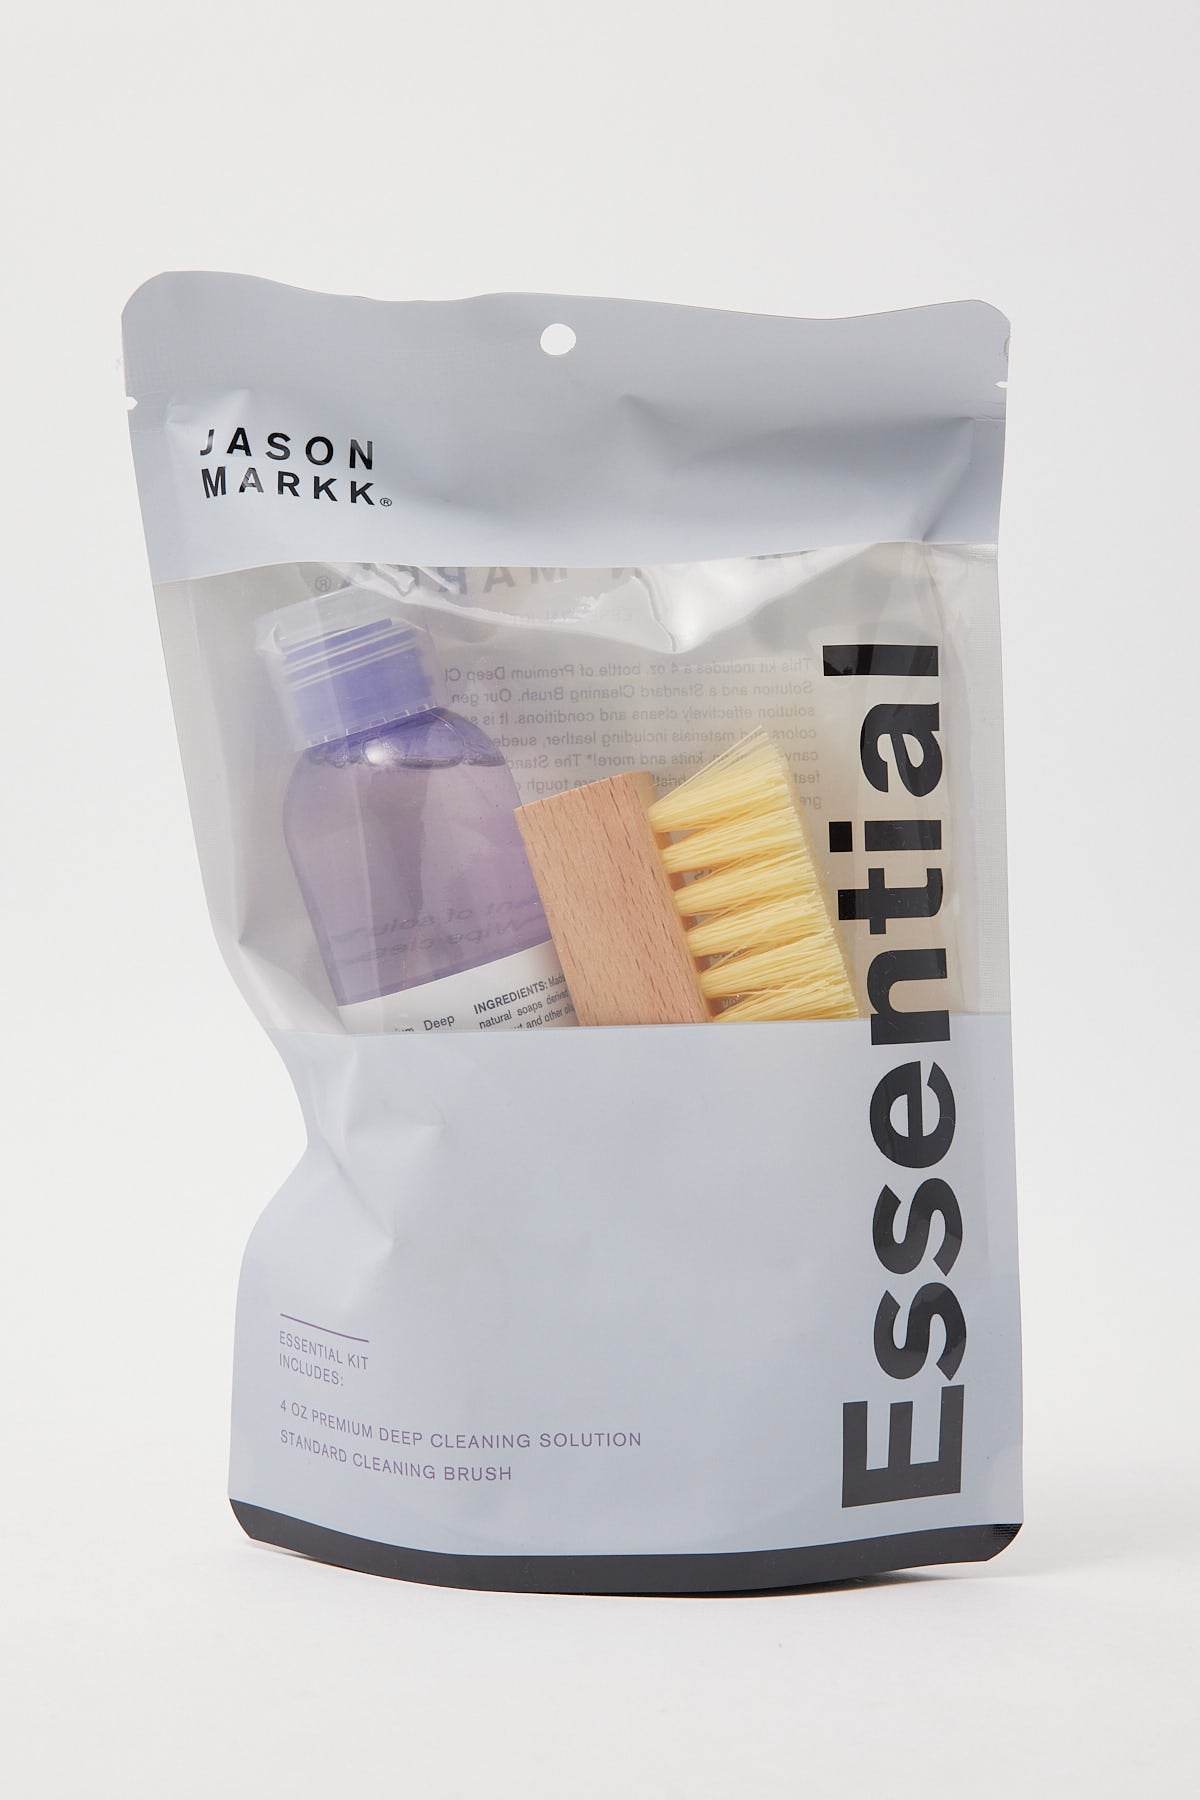 Jason Markk 4Oz Essential Kit